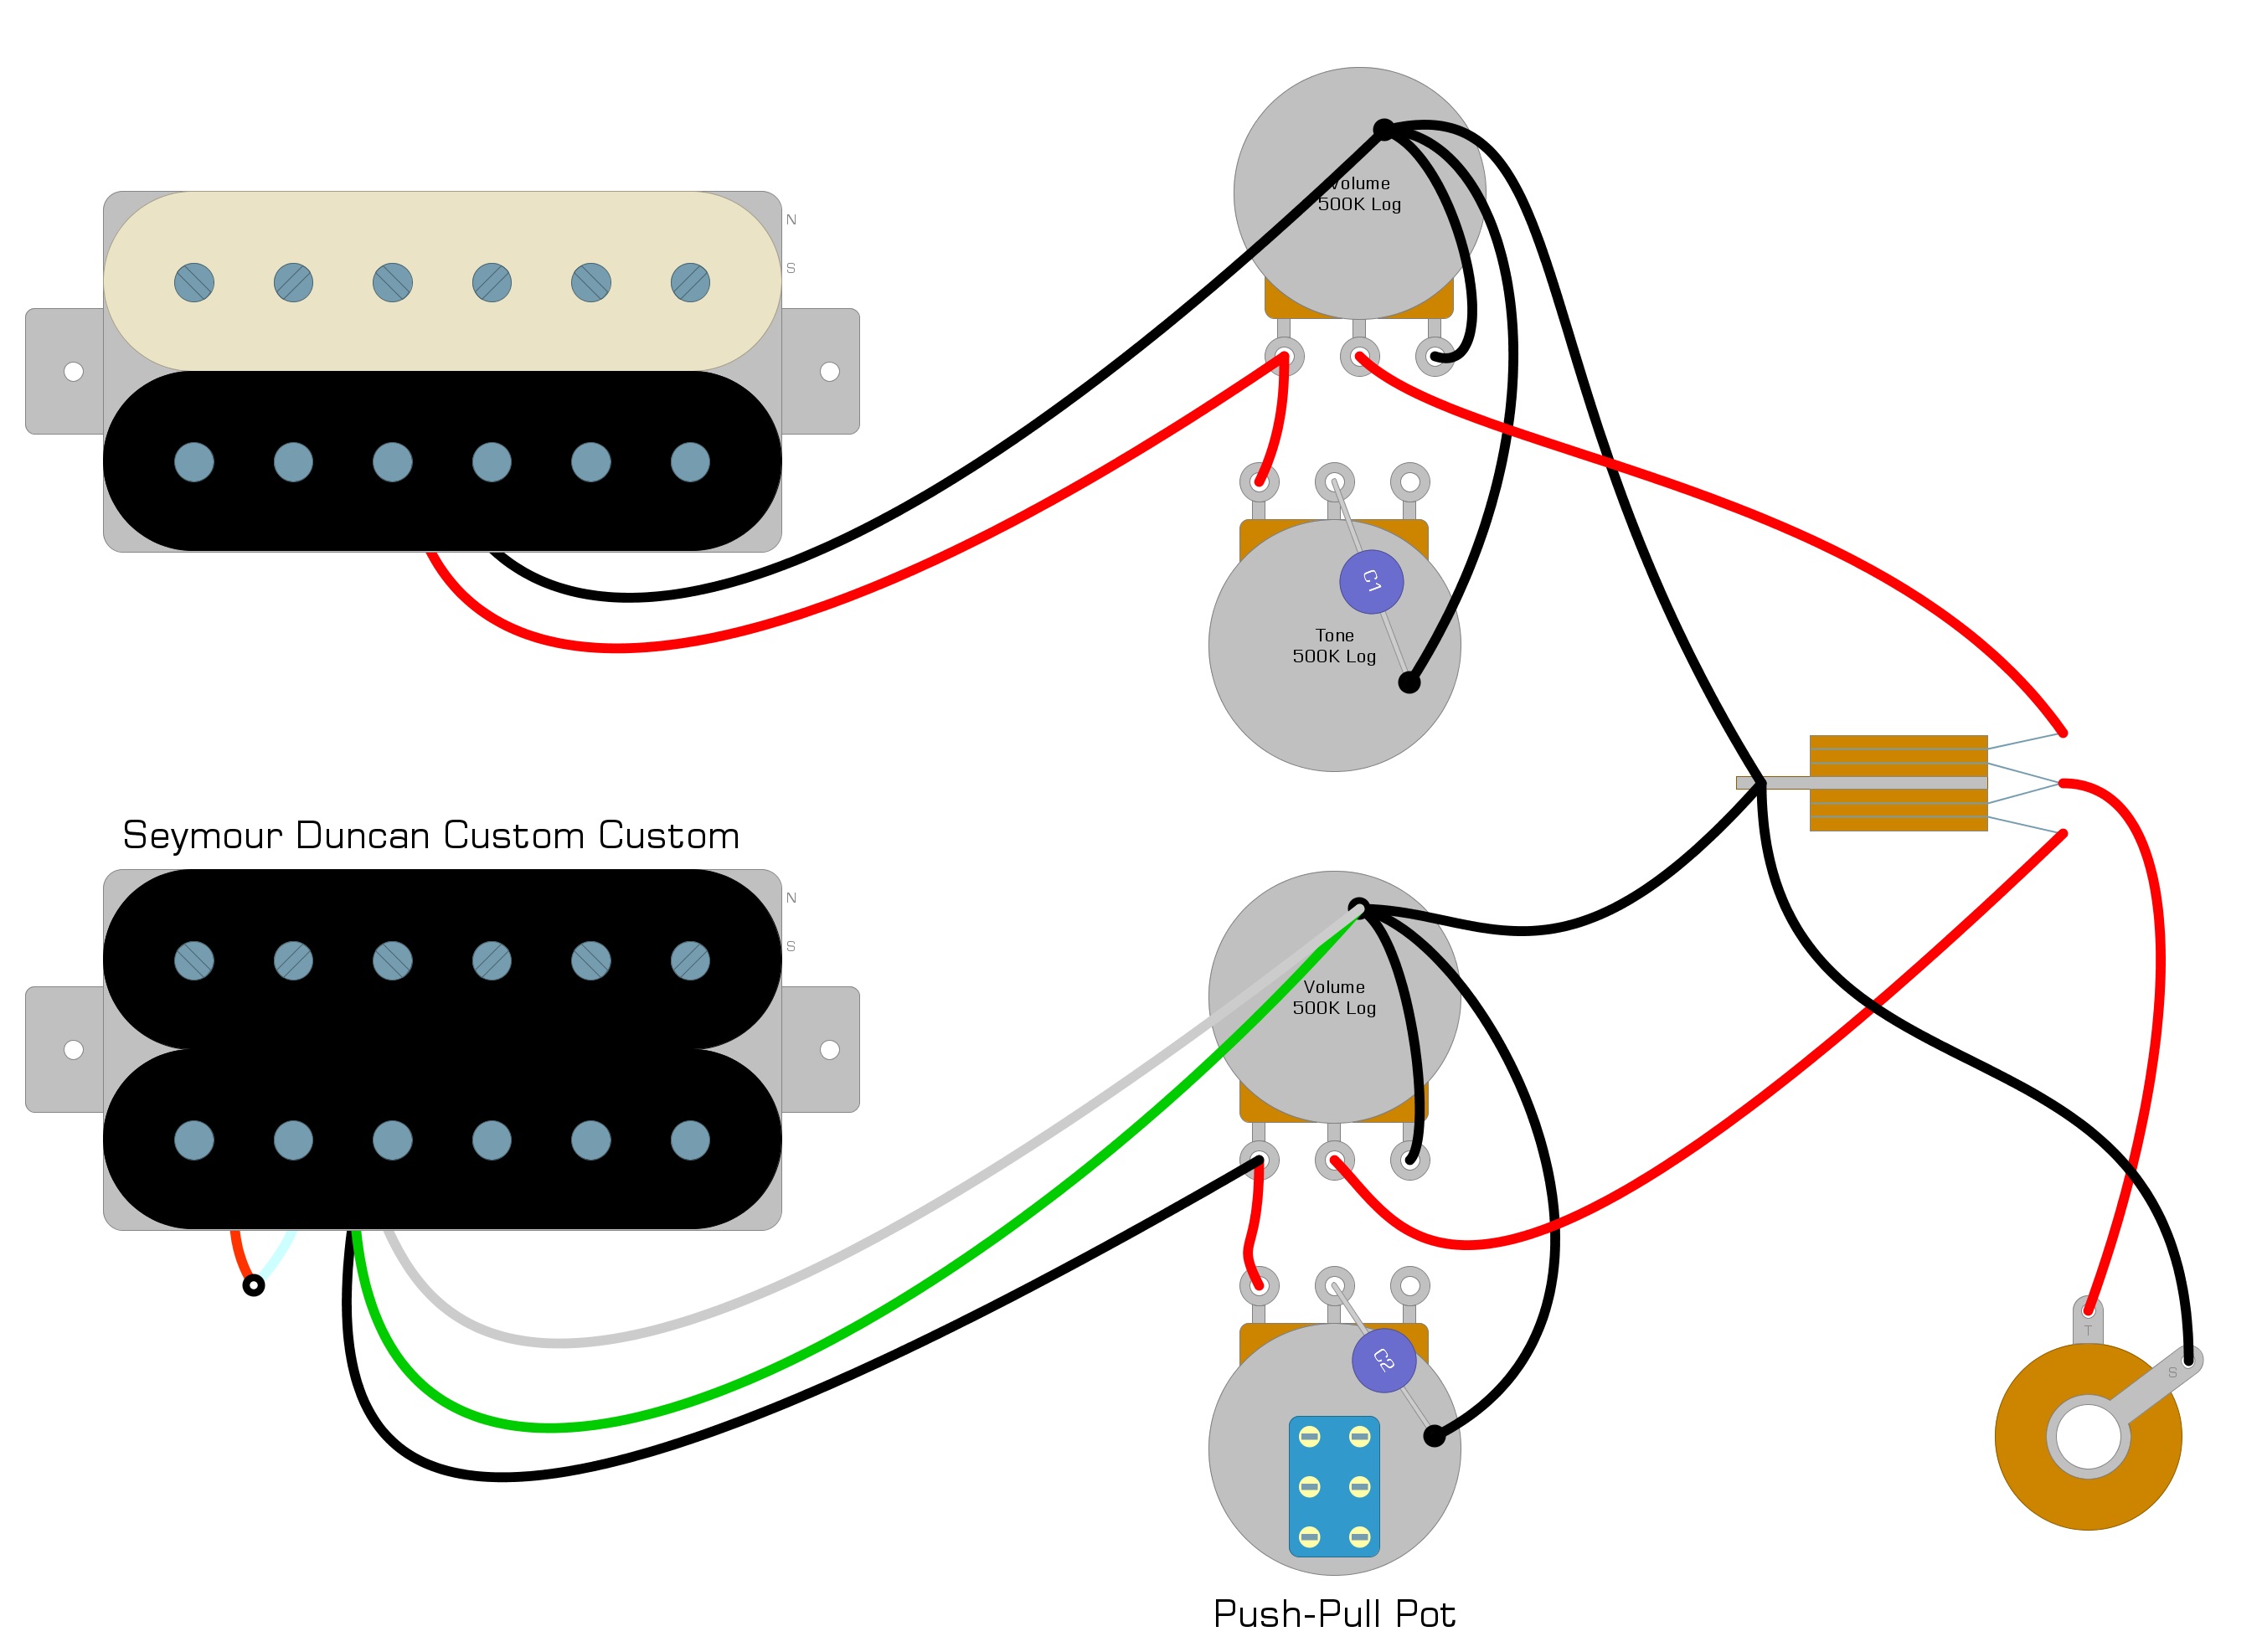 Seymour Duncan Custom Wiring, Guitar Pickup Wiring Diagrams Seymour Duncan